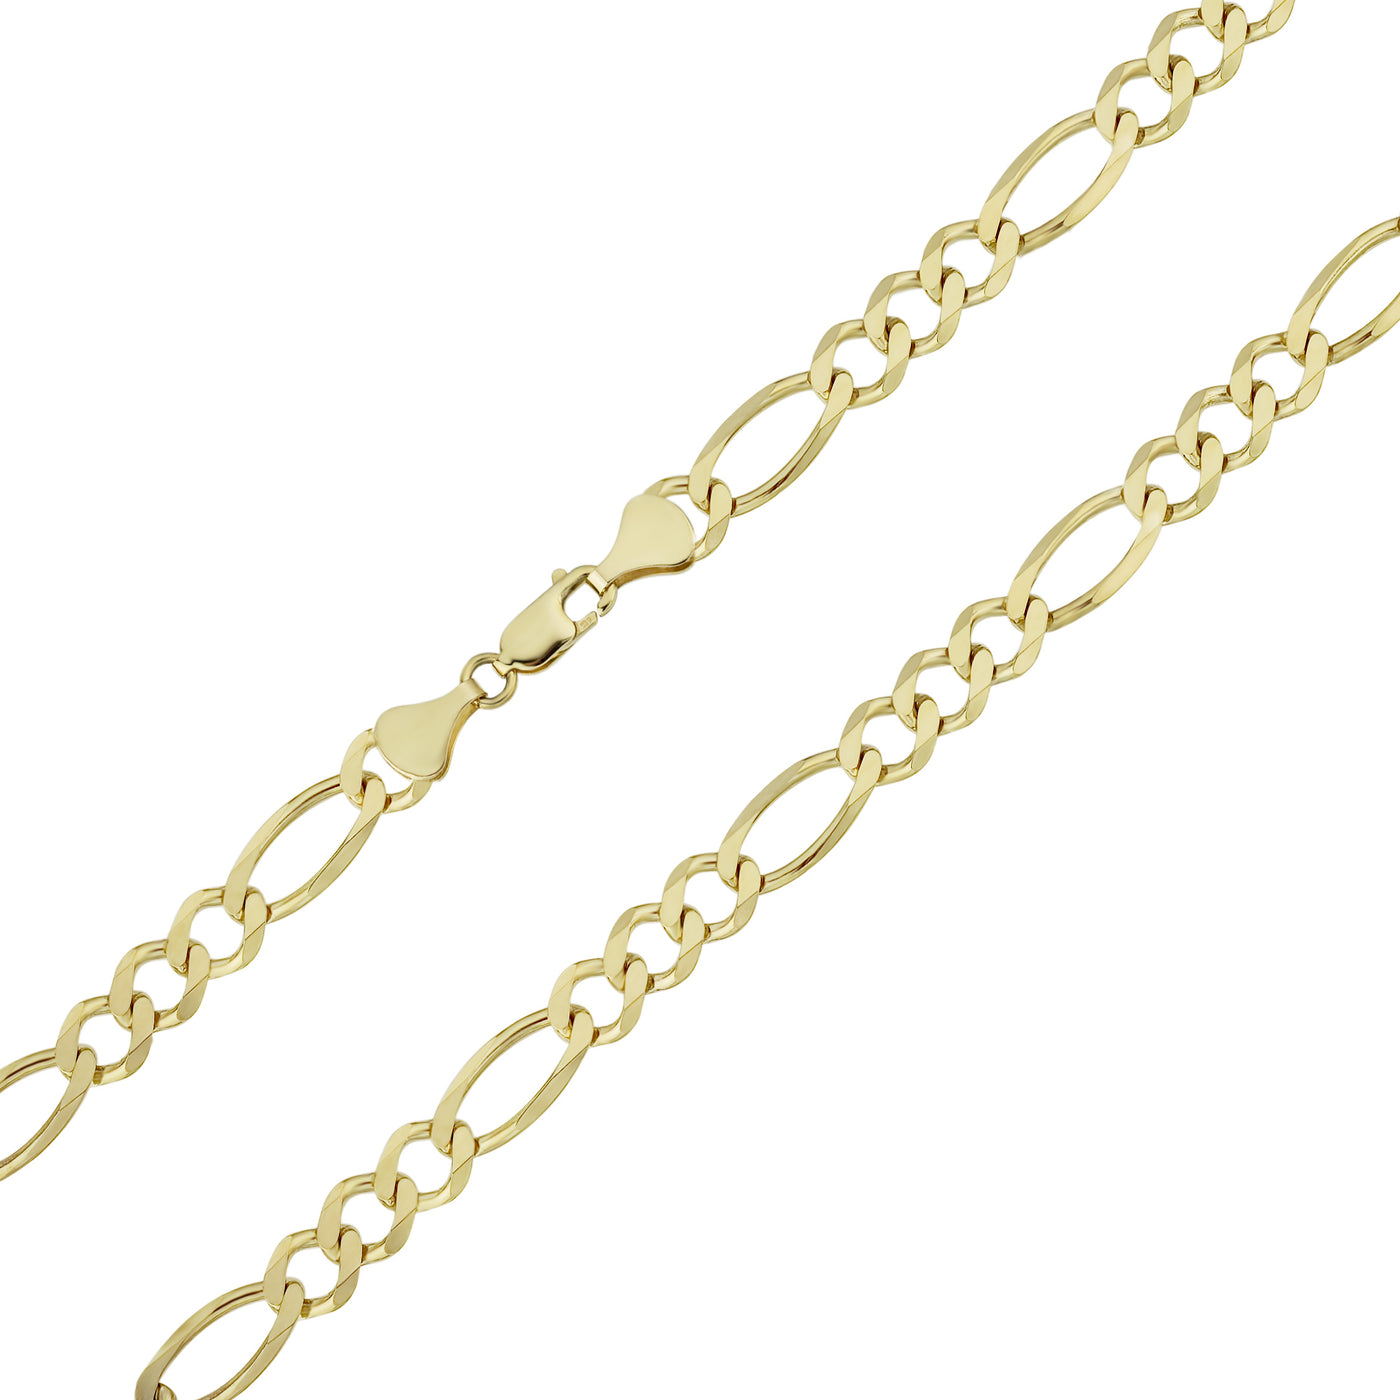 Women's Figaro Chain 14K Yellow Gold - Solid